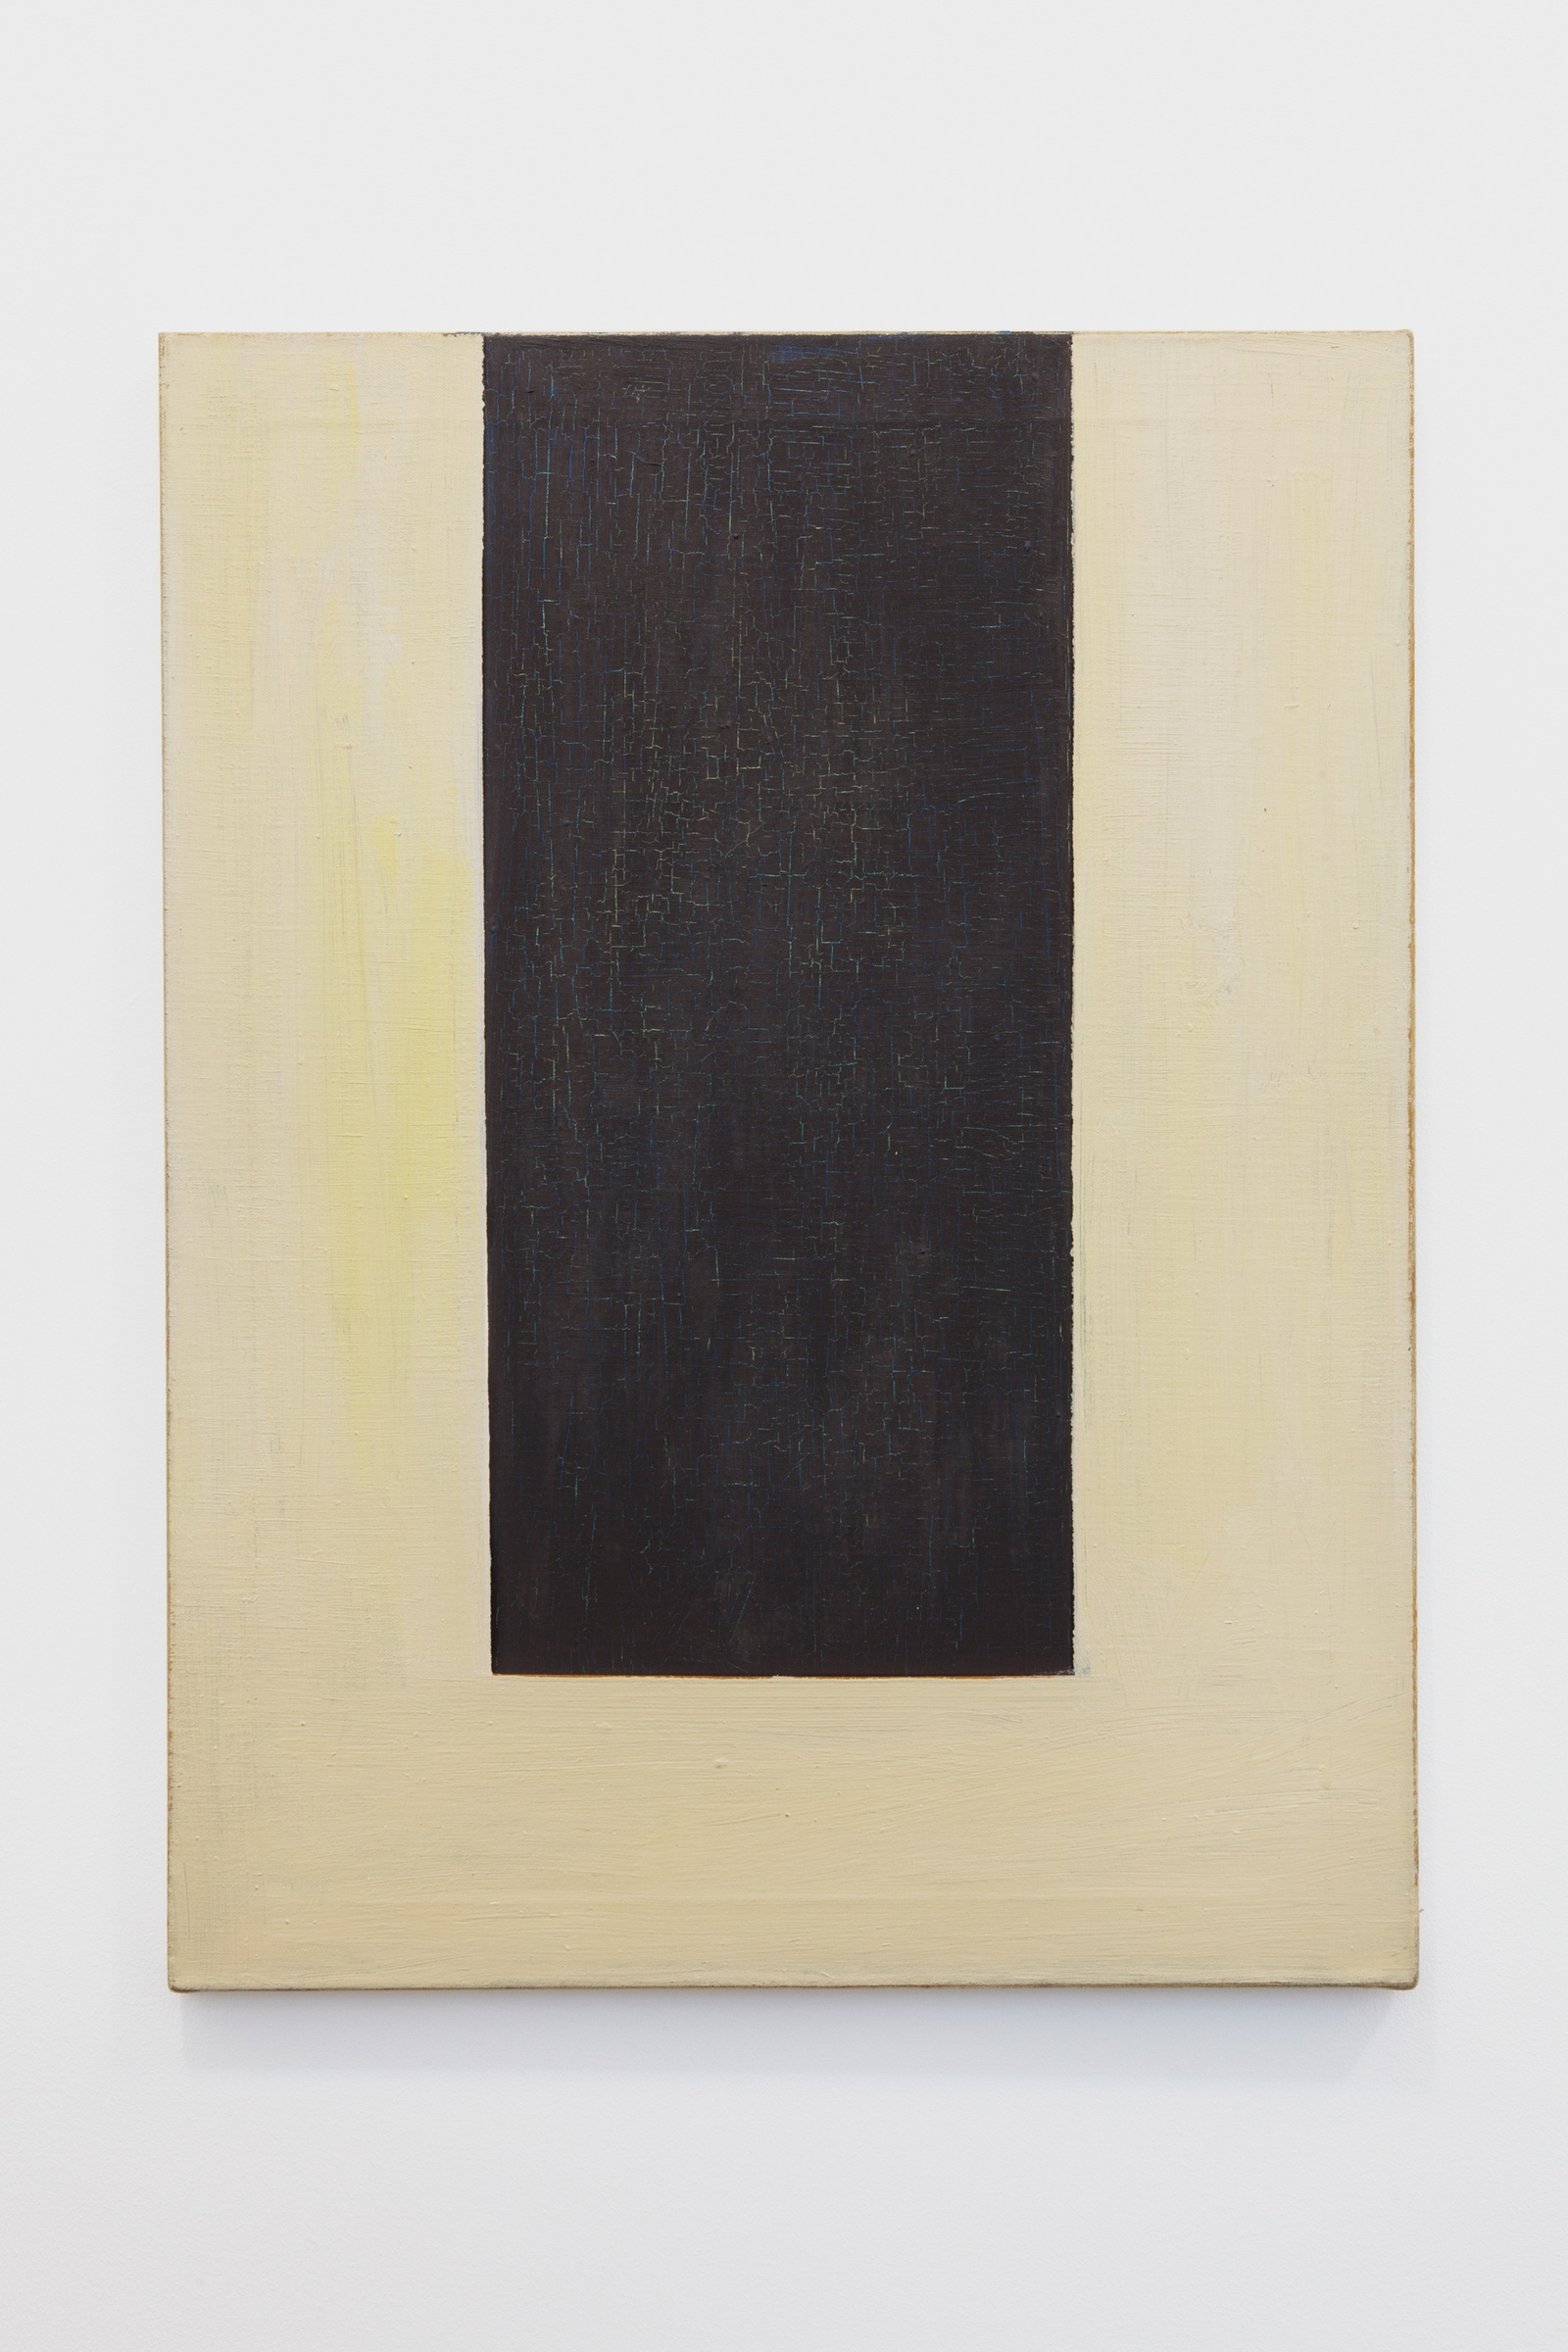 Raoul De KeyserObstakel, 1990oil on canvas55 x 50 cm | 21 2/3 x 19 2/3 in